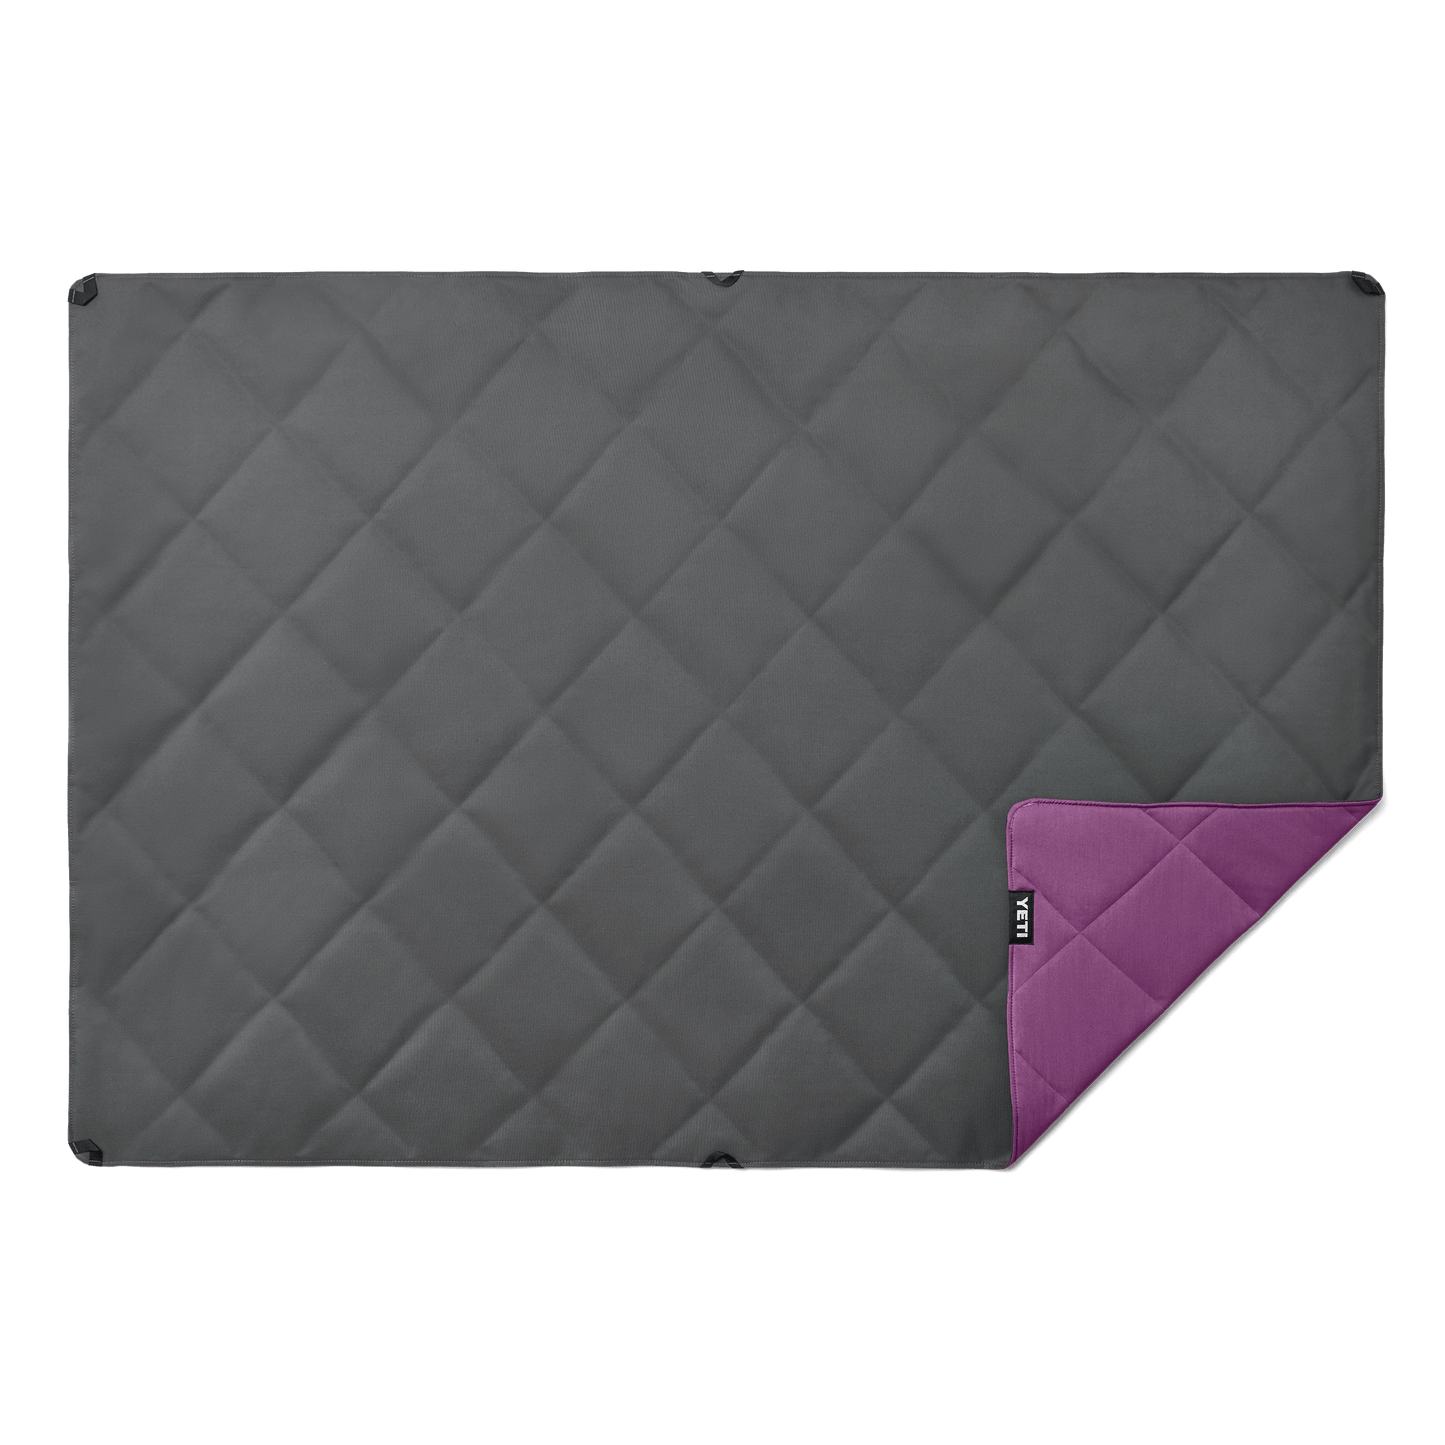 YETI Lowlands® Blanket Nordic Purple